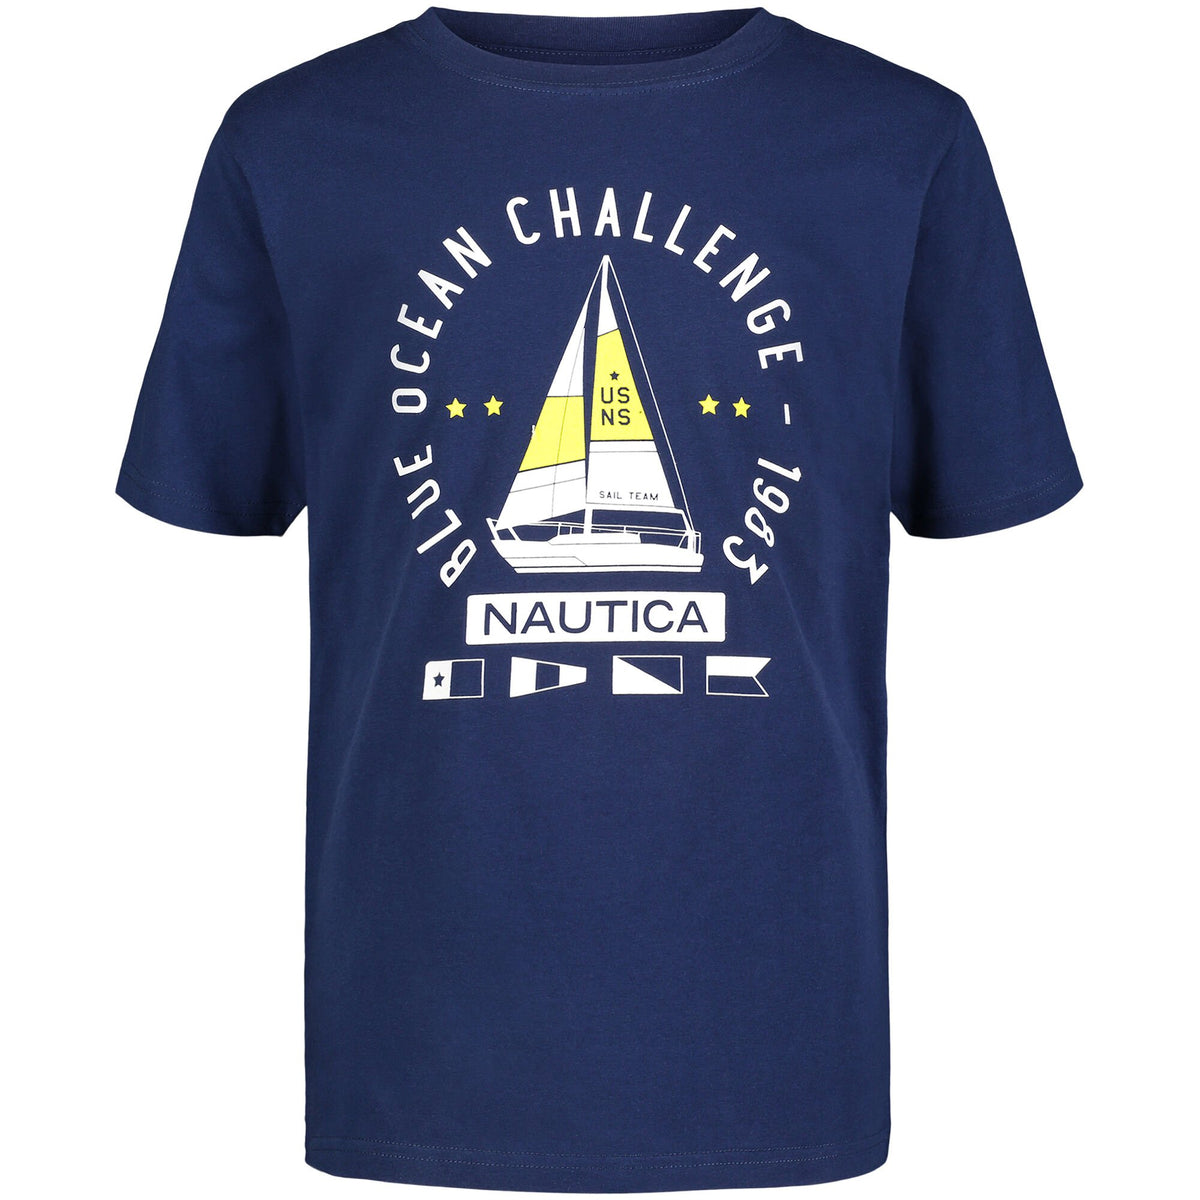 Nautica Little Boys' Ocean Challenge Graphic T-Shirt J Navy